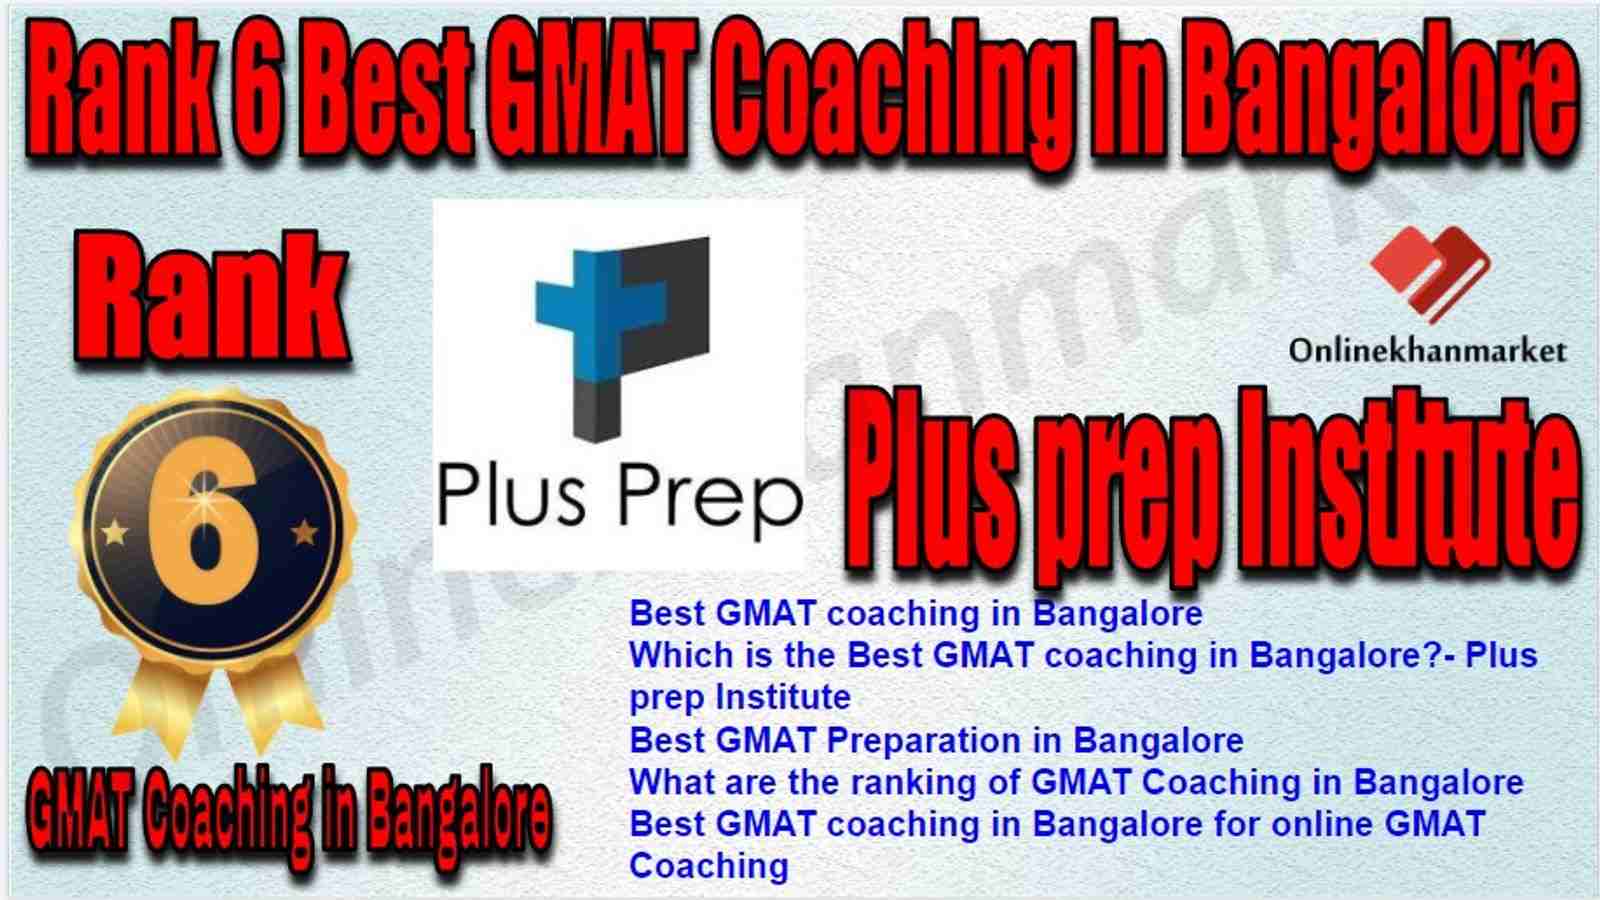 Rank 6 Best GMAT Coaching in Bangalore